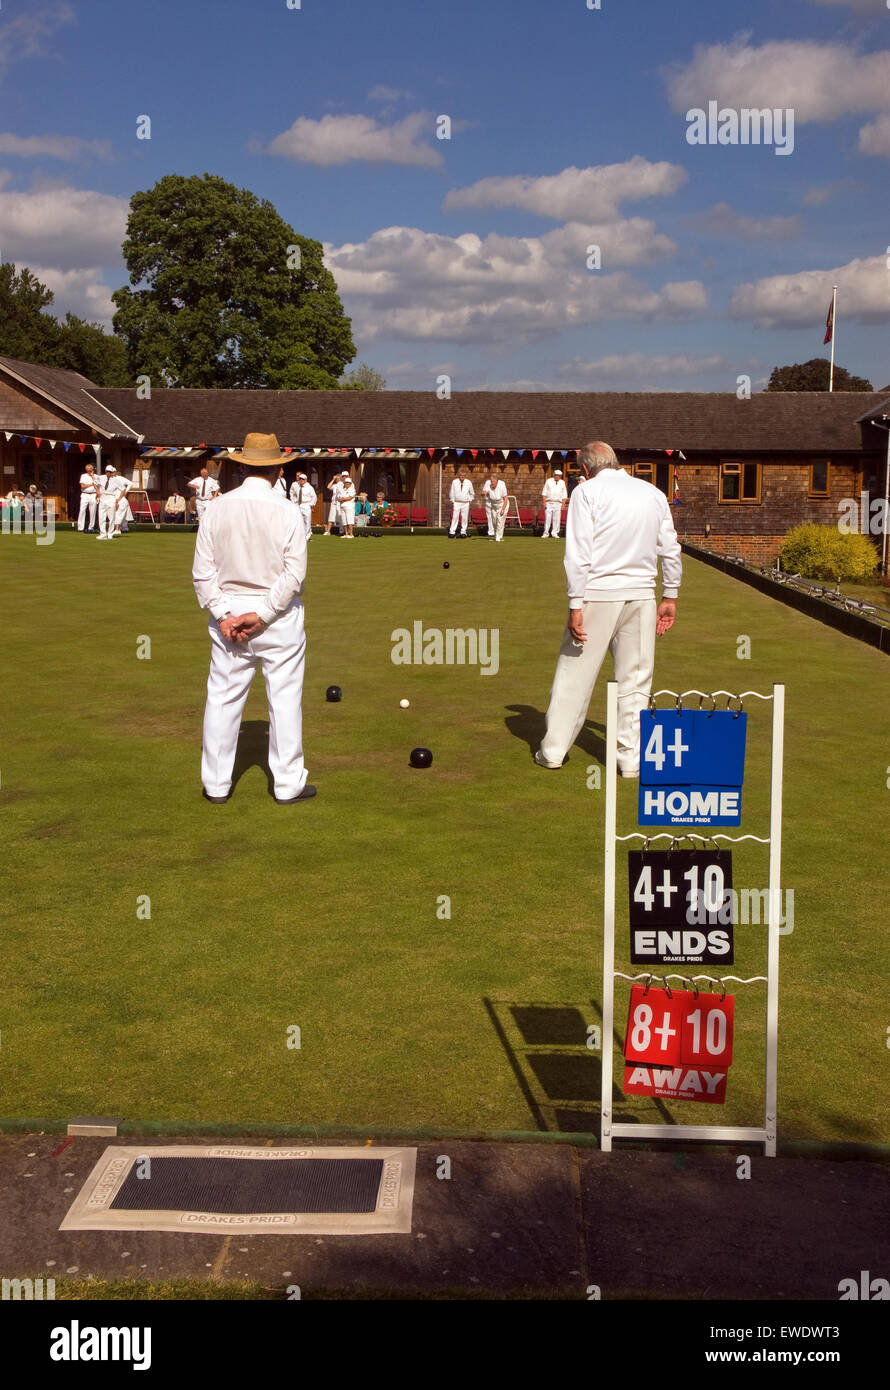 Bowls match in progress, Frensham, Surrey, UK. Stock Photo